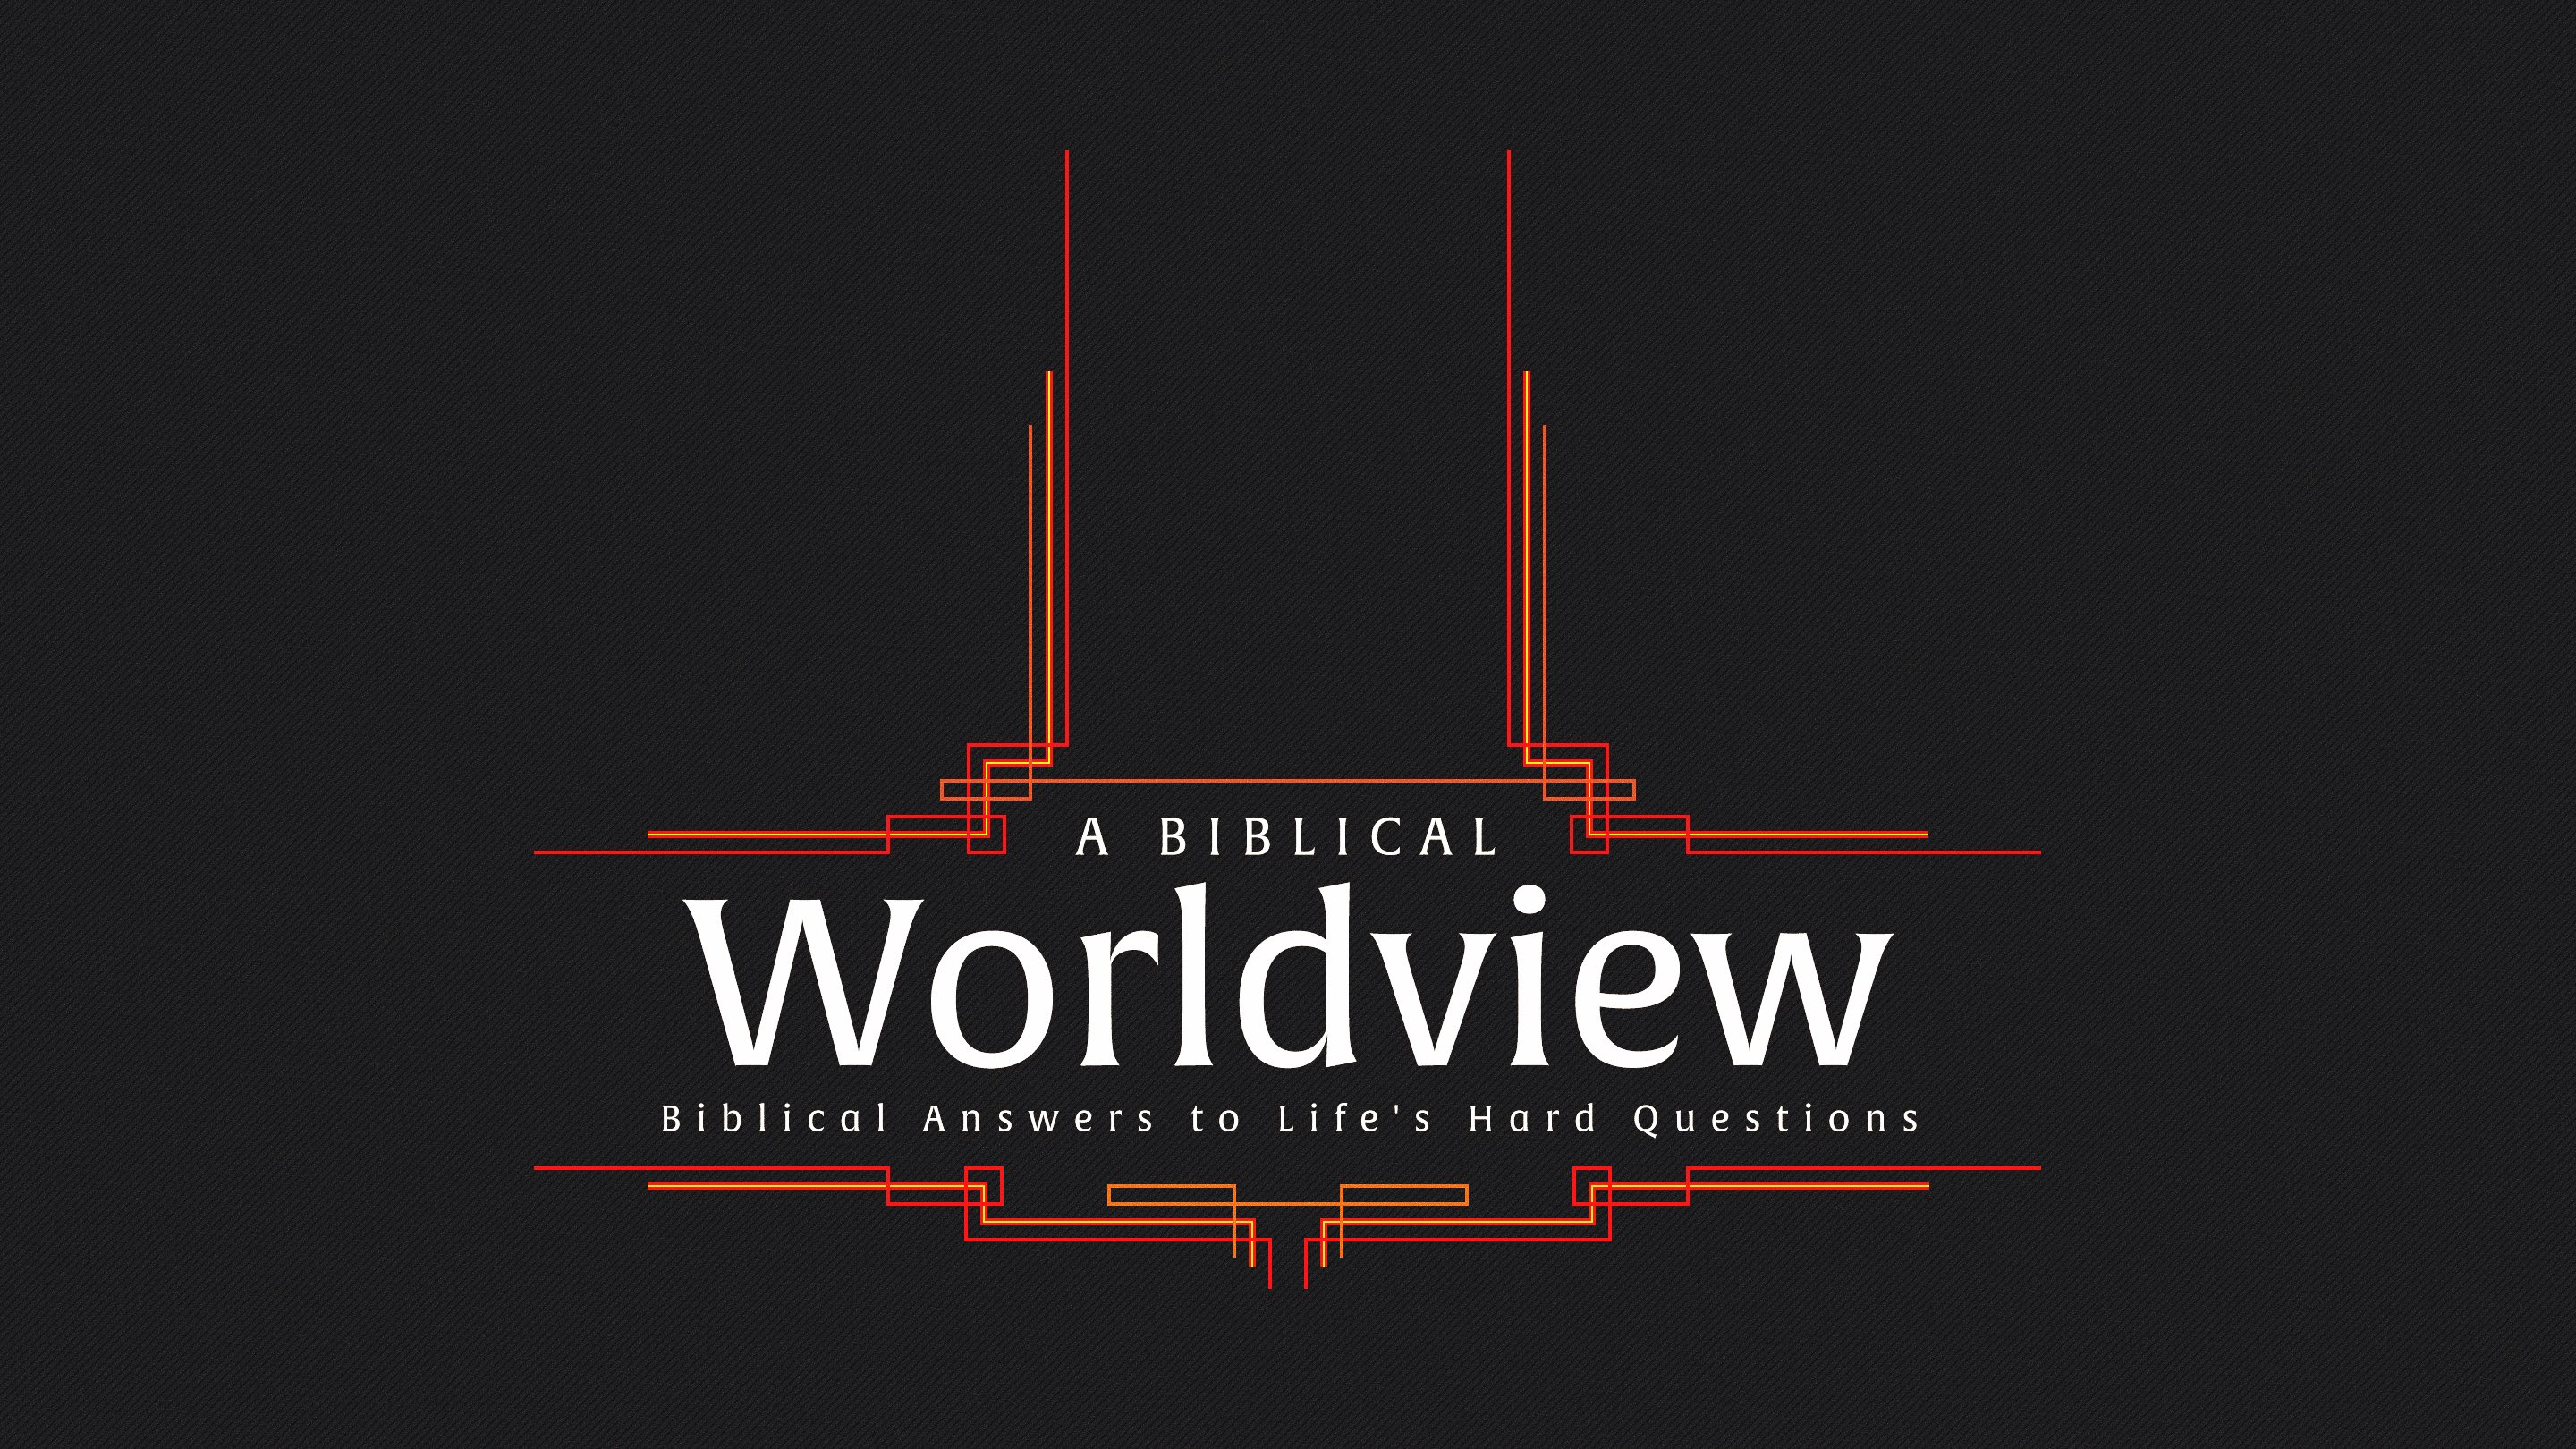 Developing a Biblical Worldview